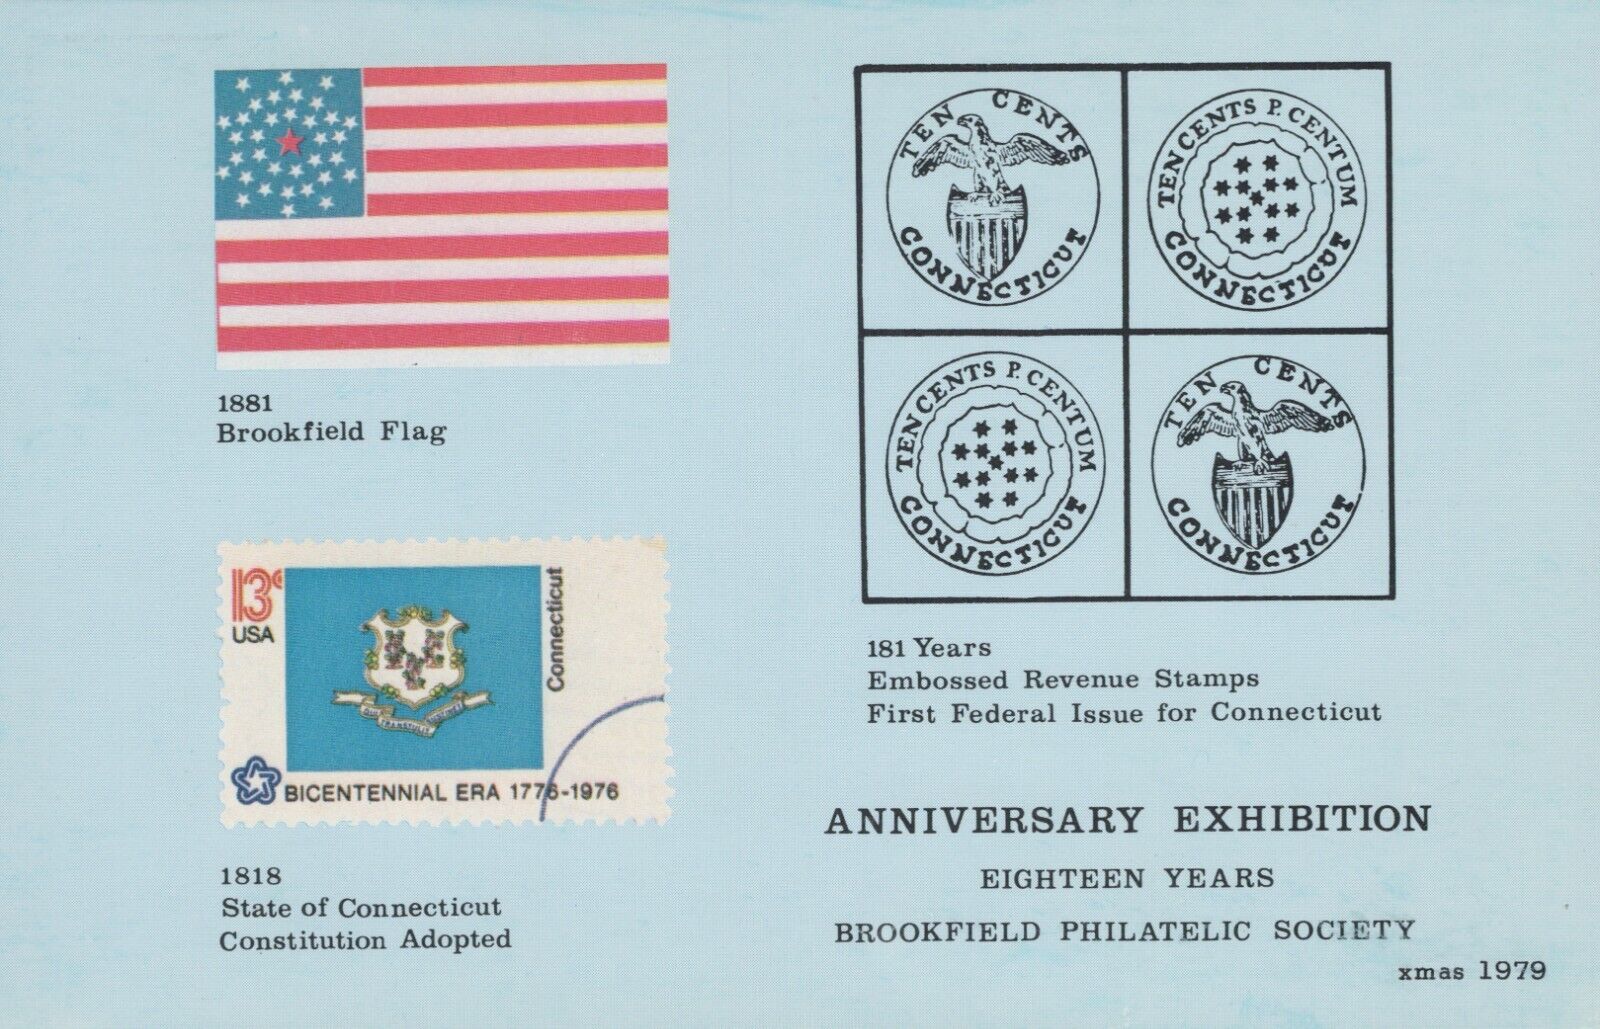 Brookfield Philatelic Society Anniversary Exhibition CT Chrome Vintage Post Card